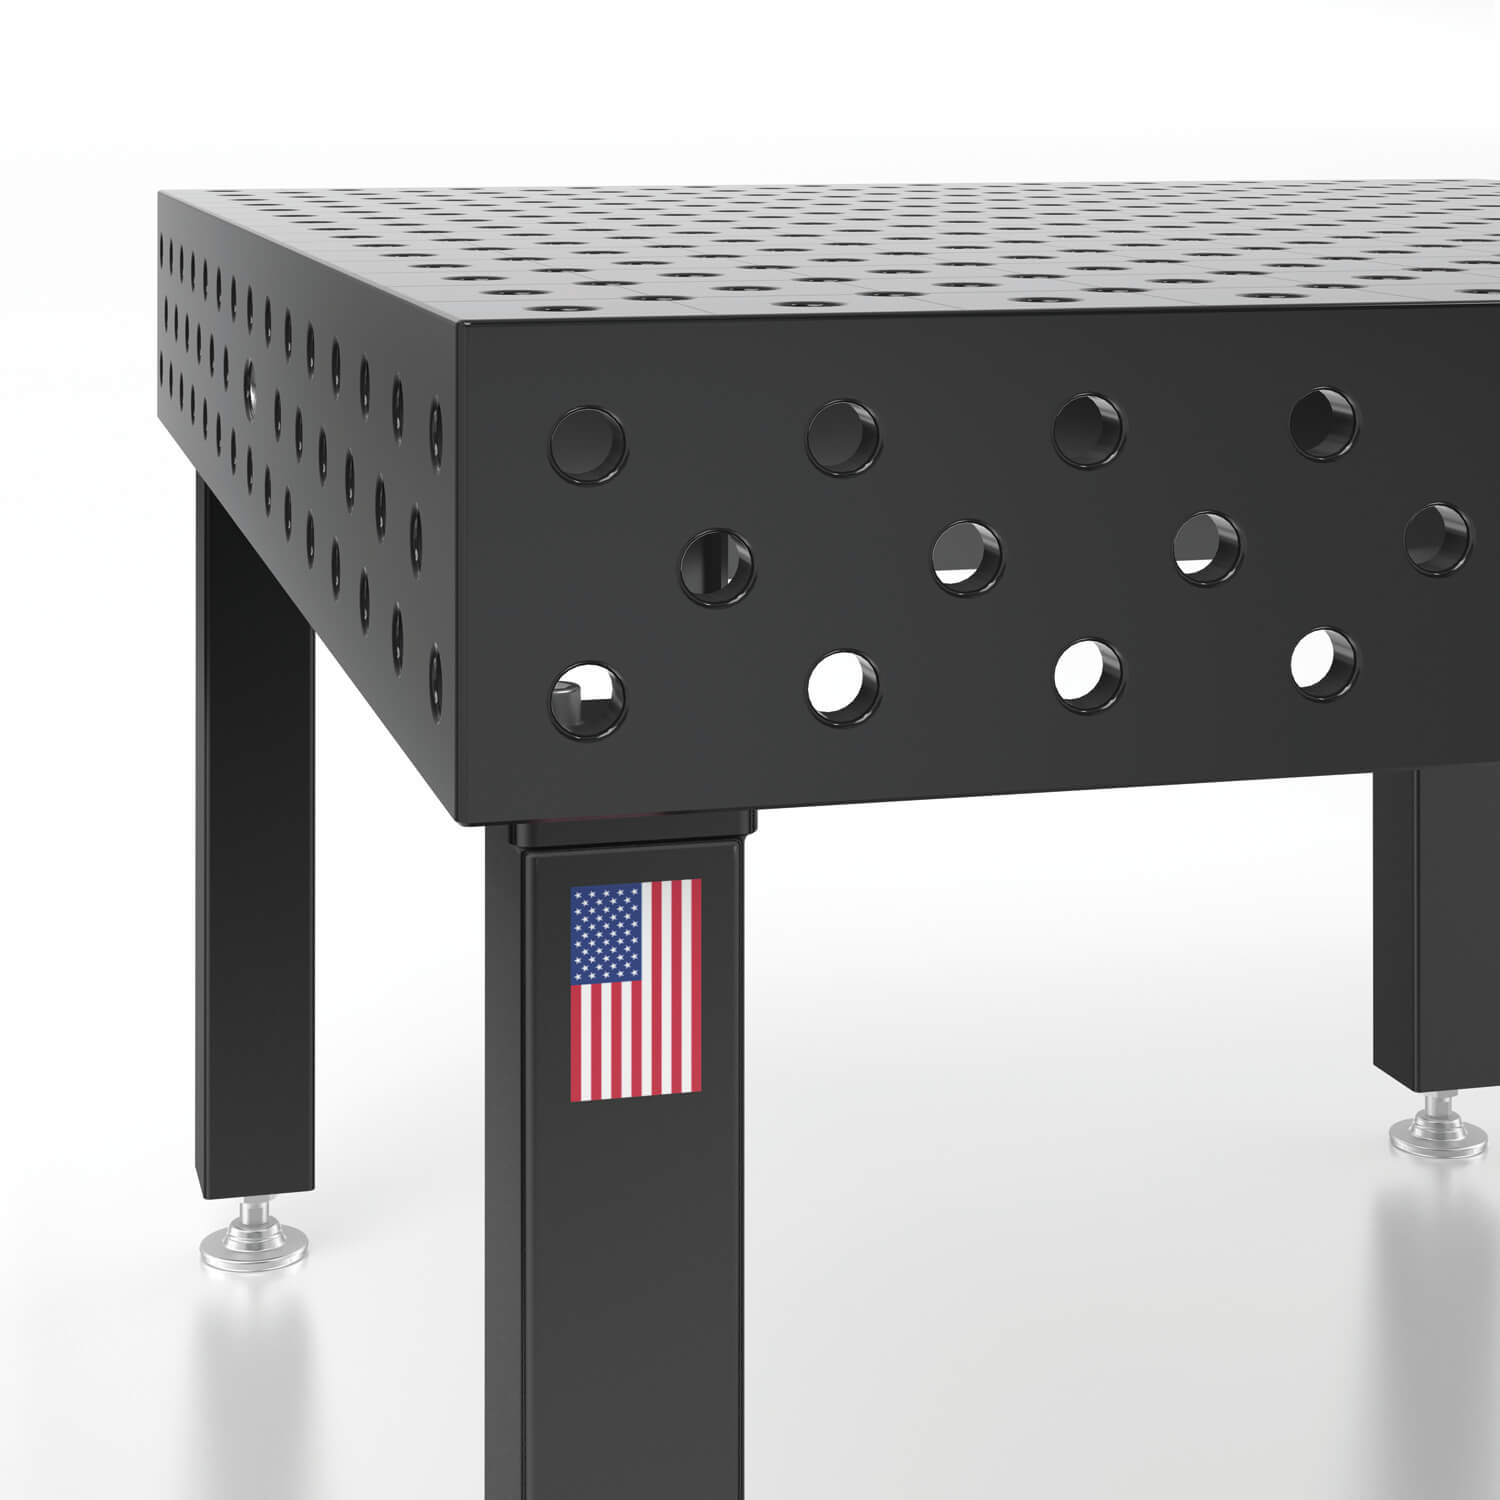 US280030.XD7: System 28 4'x8' (48"x96") Siegmund Imperial Series (Inch) Welding Table with Plasma Nitration